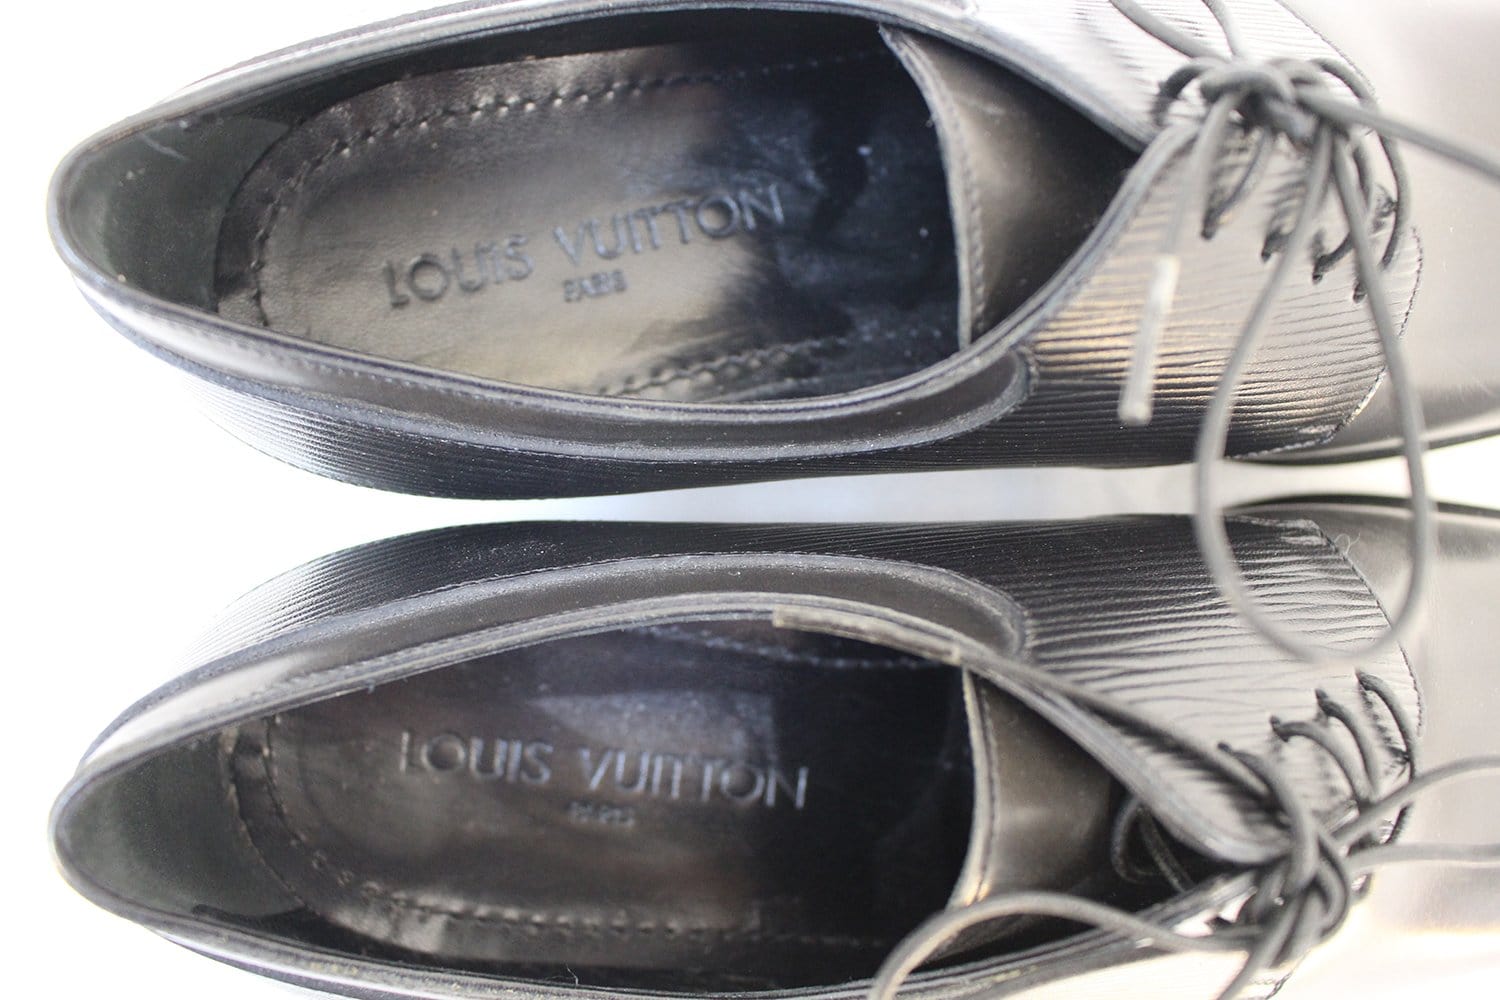 Leather formal shoes, Louis vuitton  shoes, Formal shoes for men